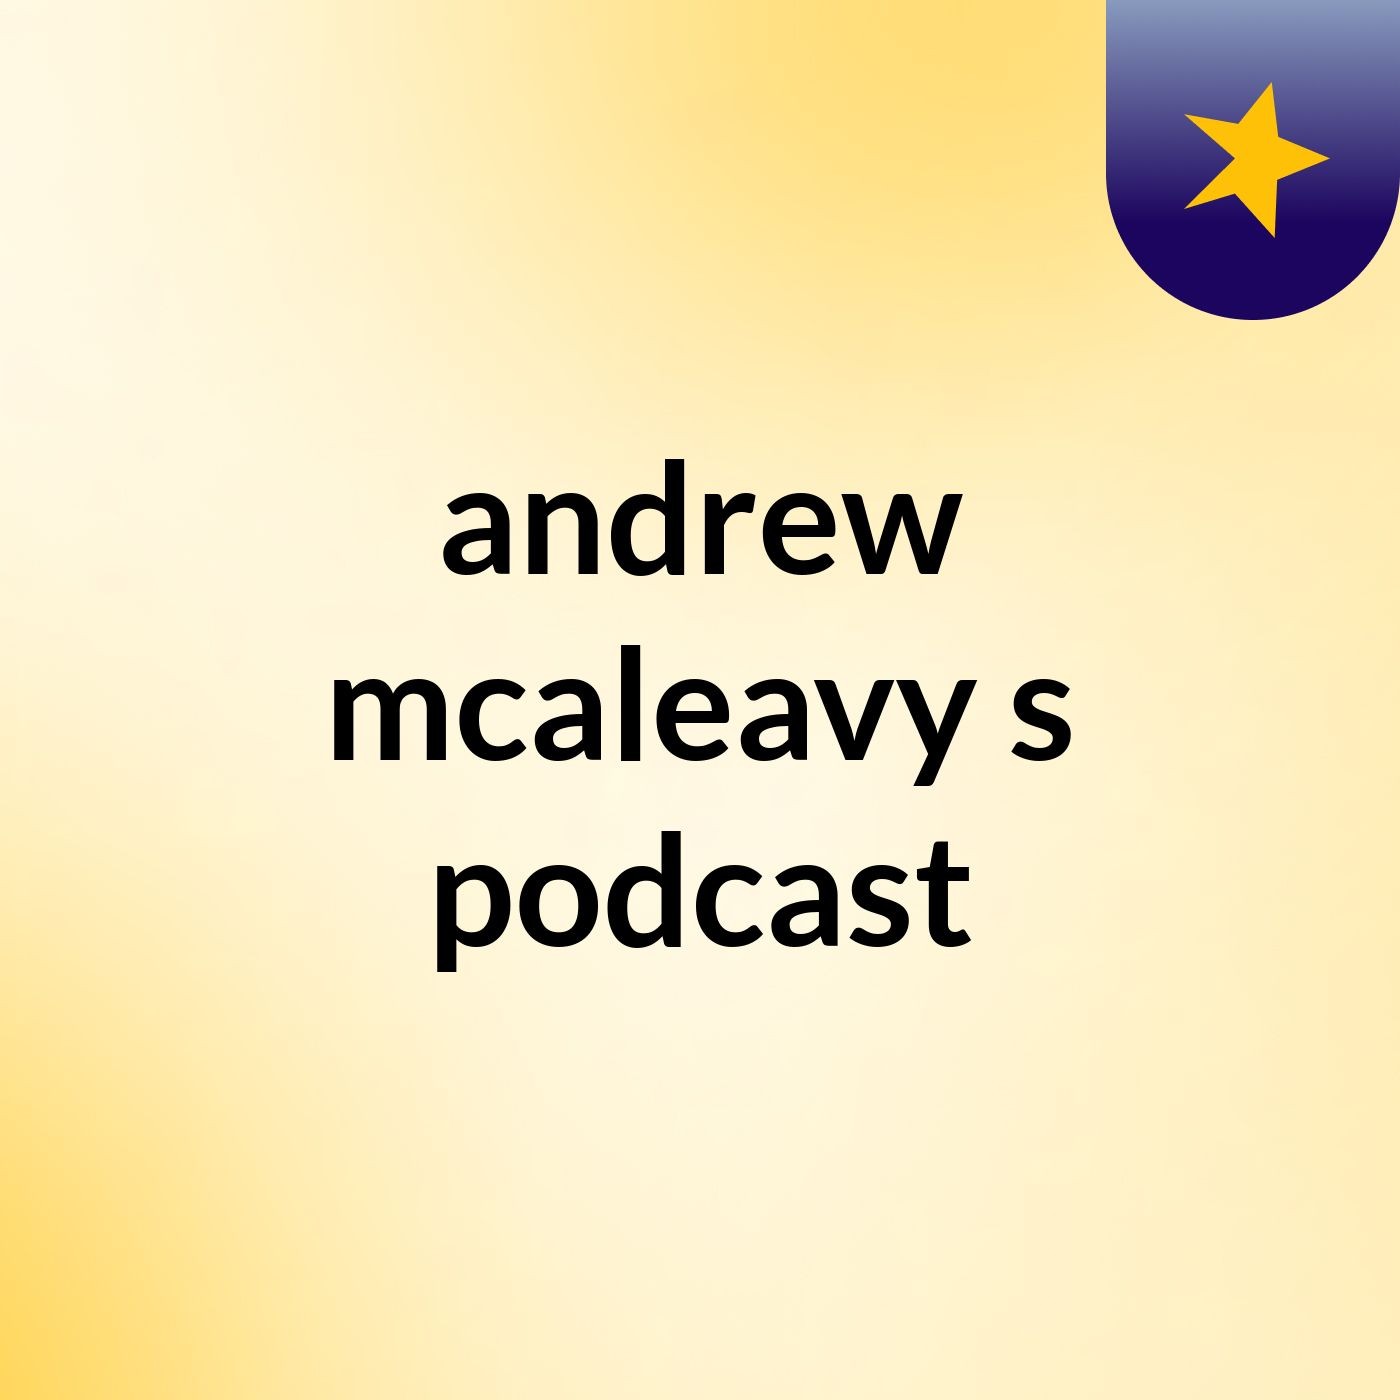 Episode 4 - andrew mcaleavy's podcast